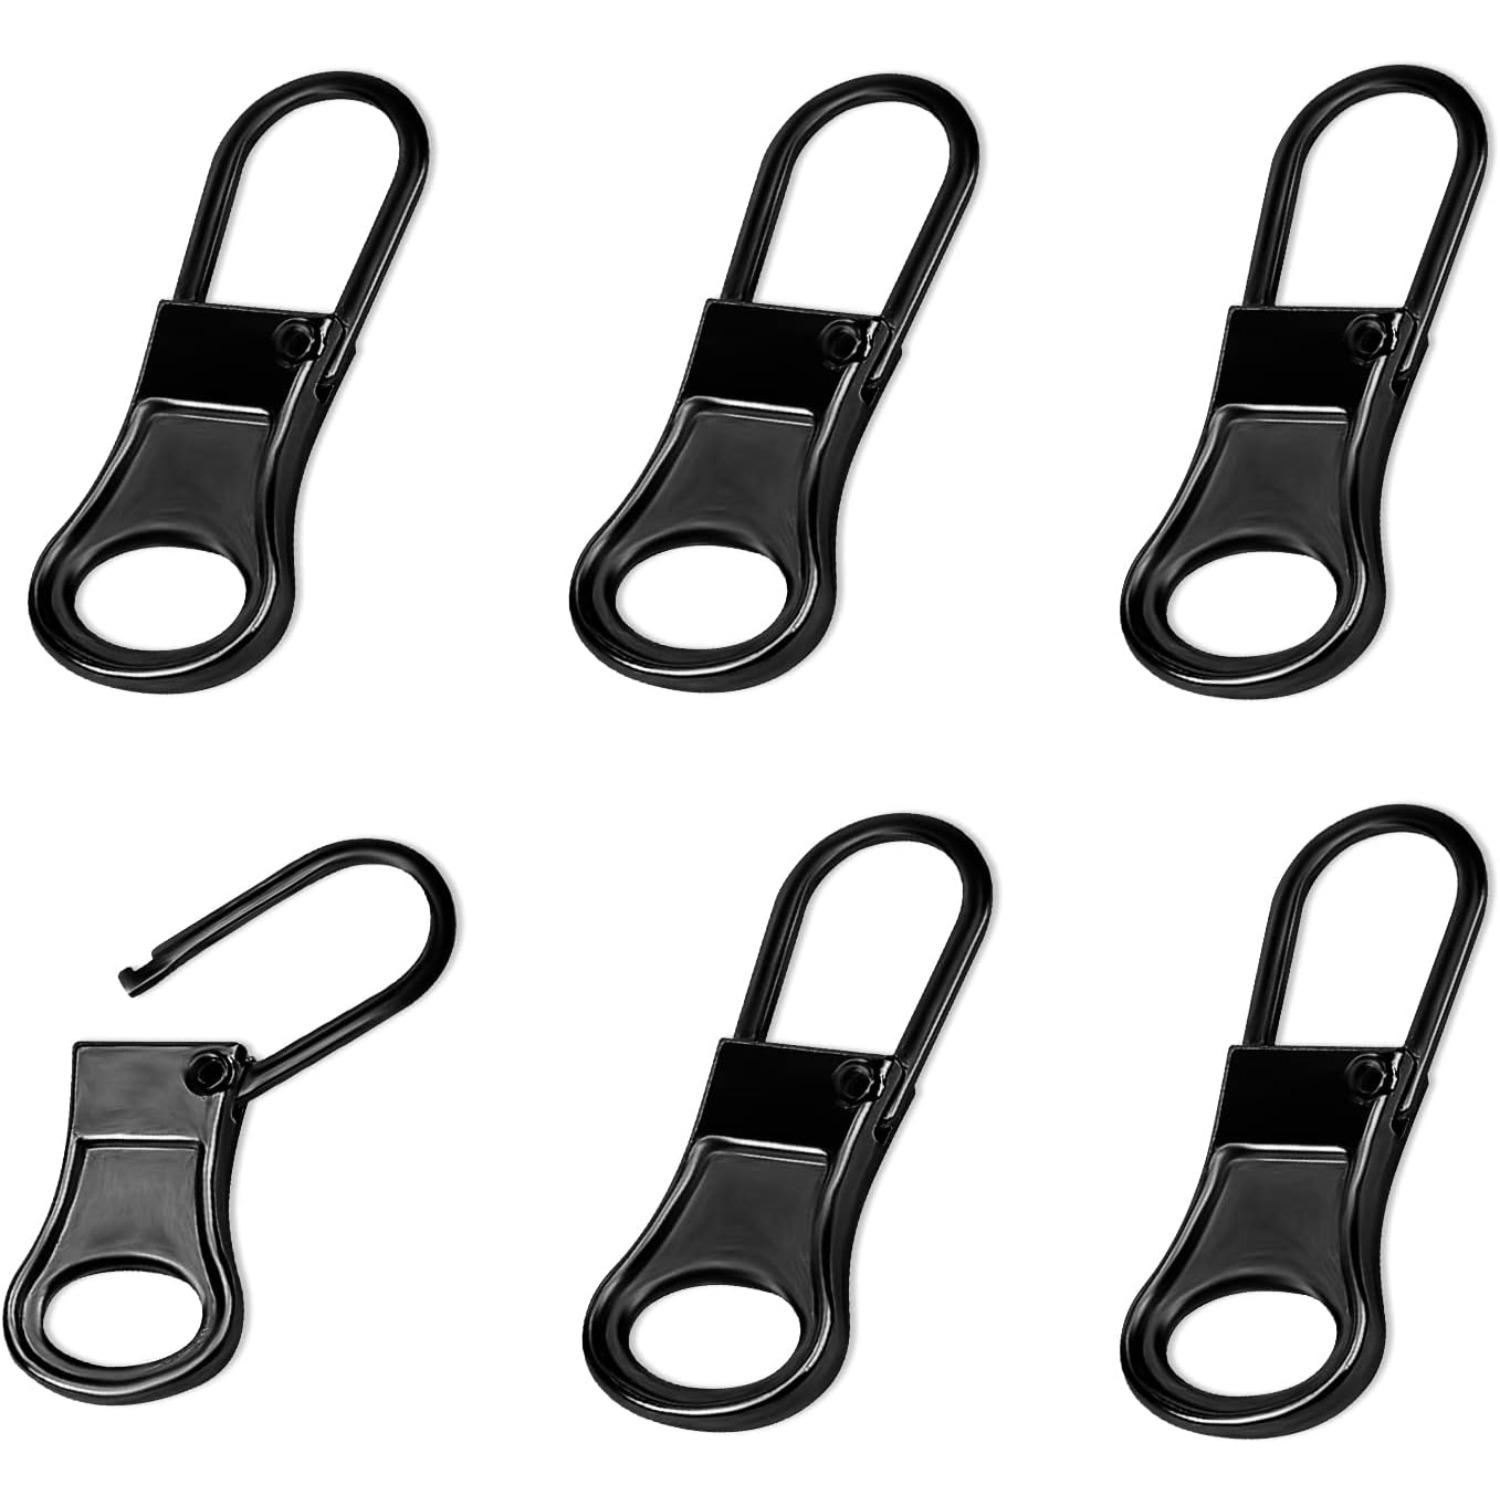 6pcs Zipper Repair Kit Universal Instant Zipper Fixer With Metal